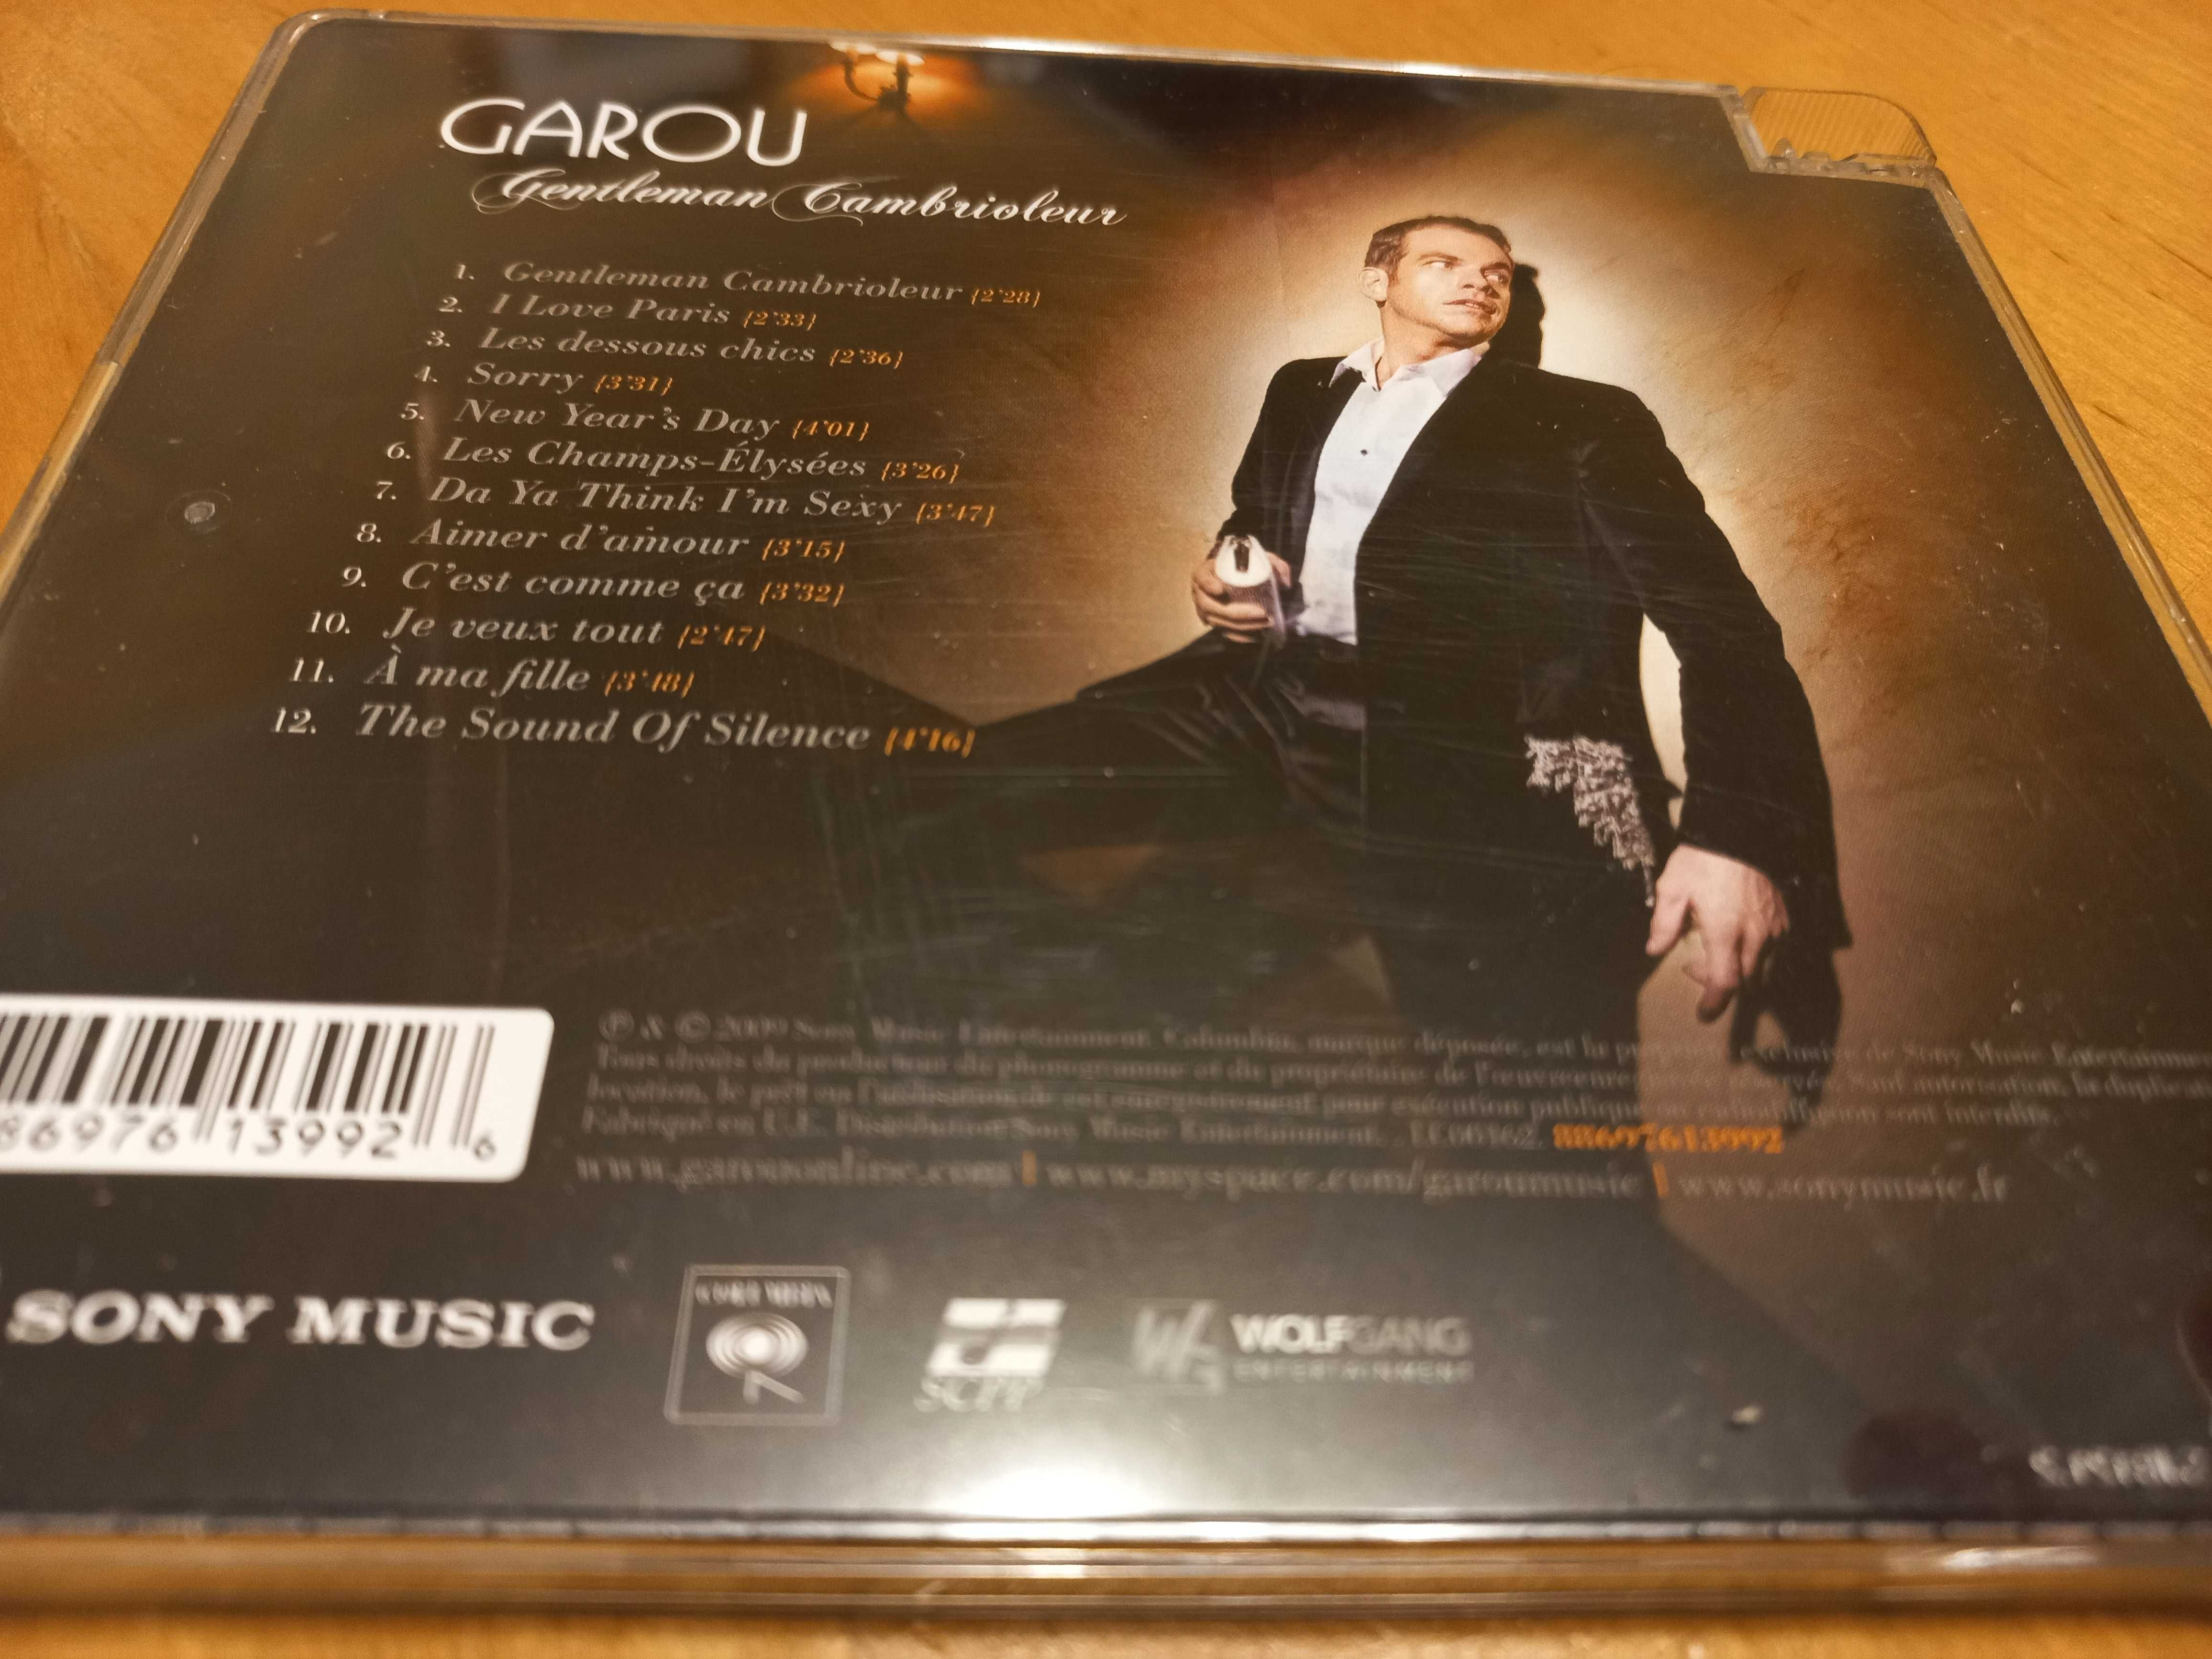 !!! druga płyta CD za 5 zł !!! - Garou, "Gentleman Cambrioleur"